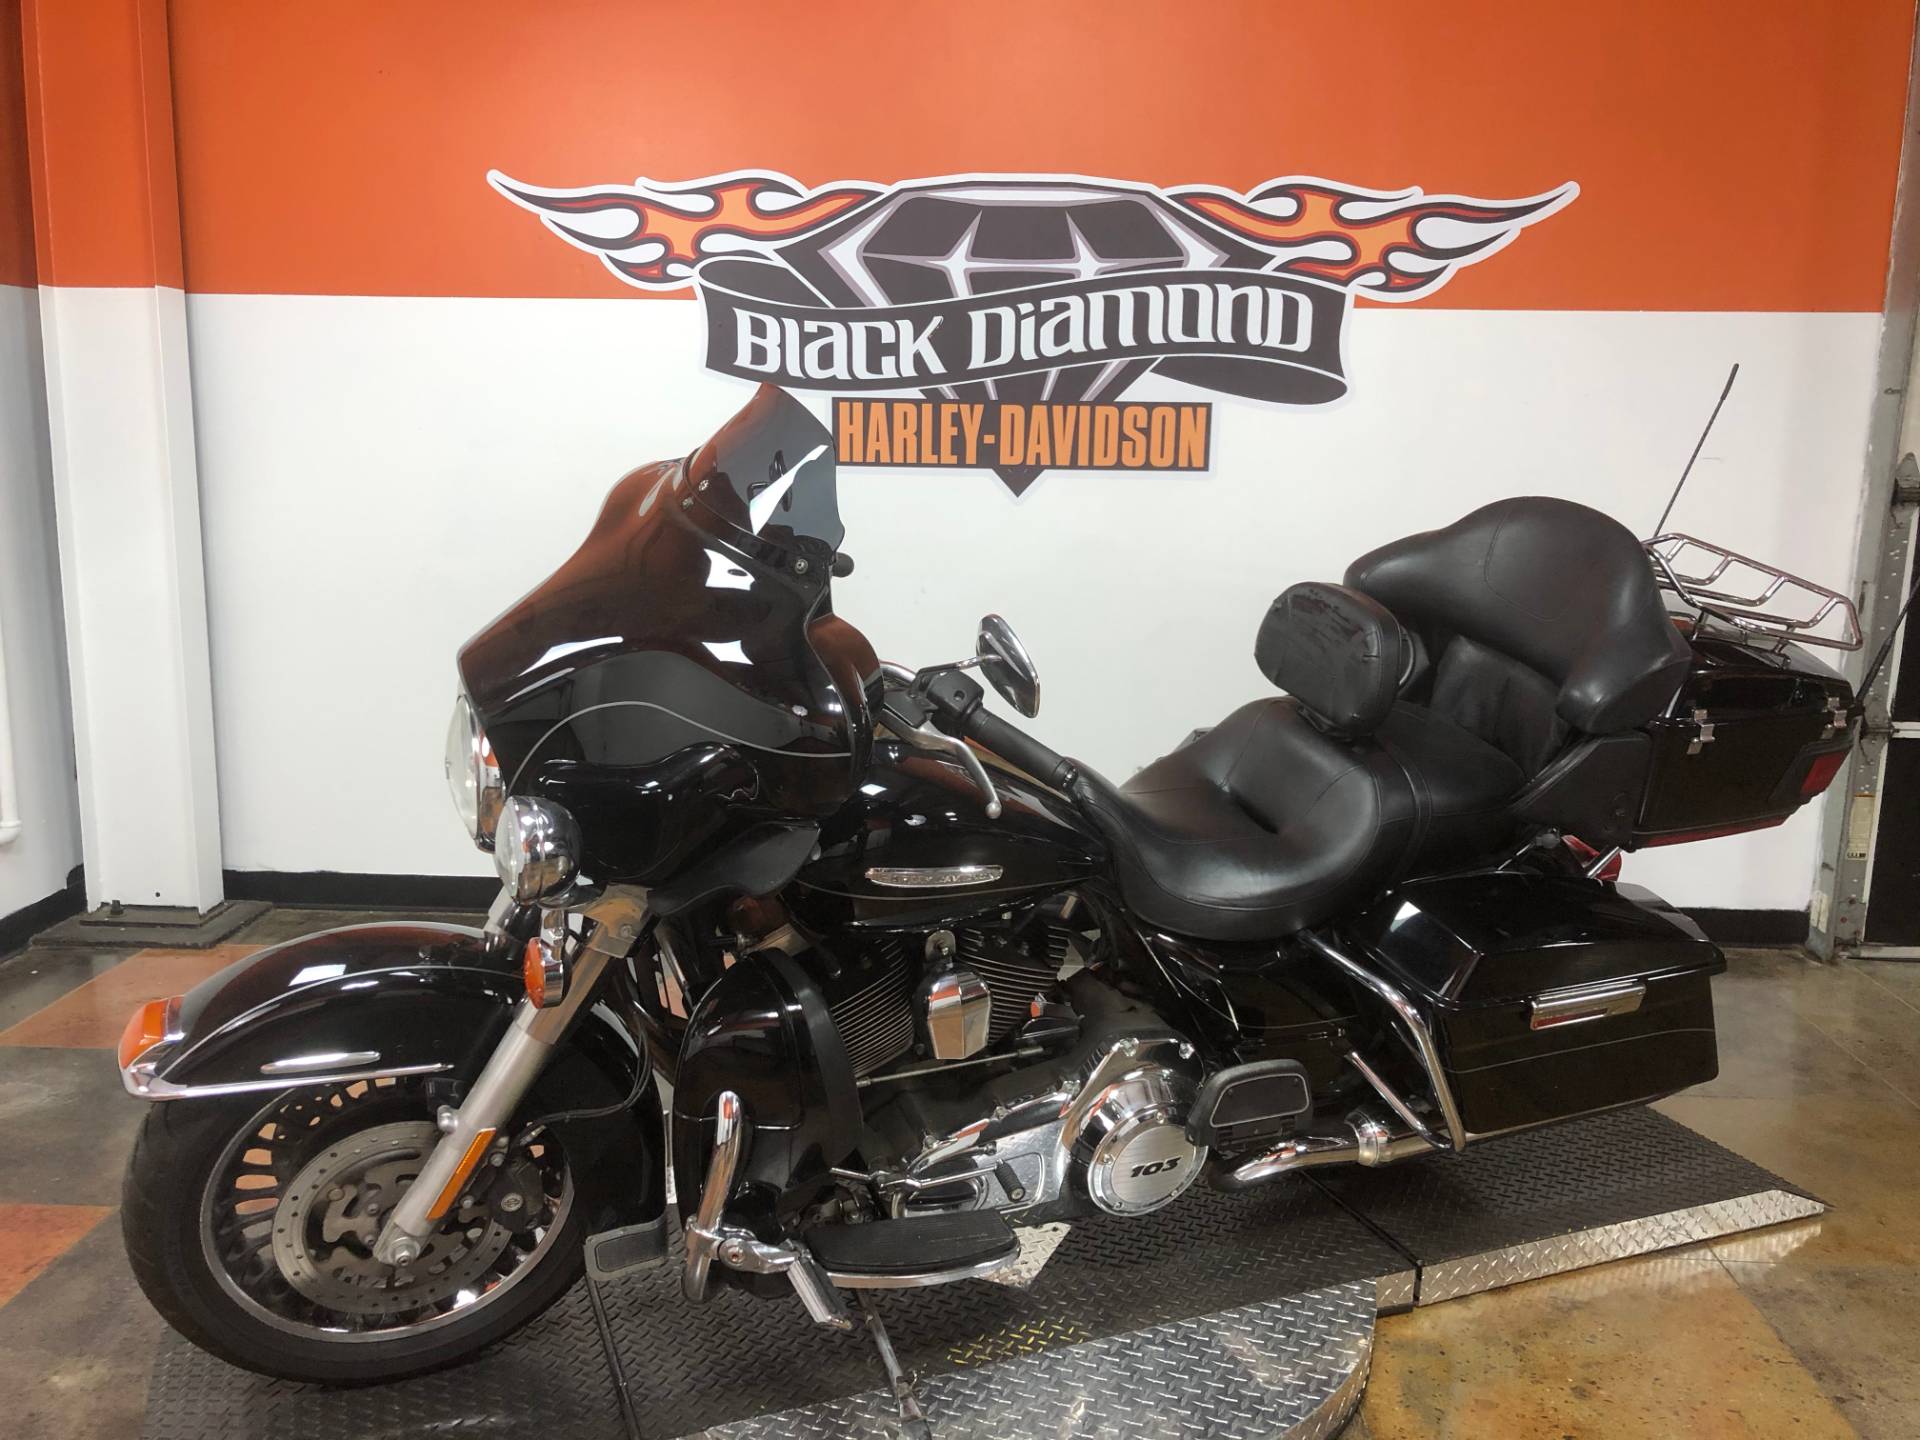 Used 2011 Harley Davidson Electra Glide Ultra Limited Vivid Black Motorcycles In Mount Vernon Il U675850